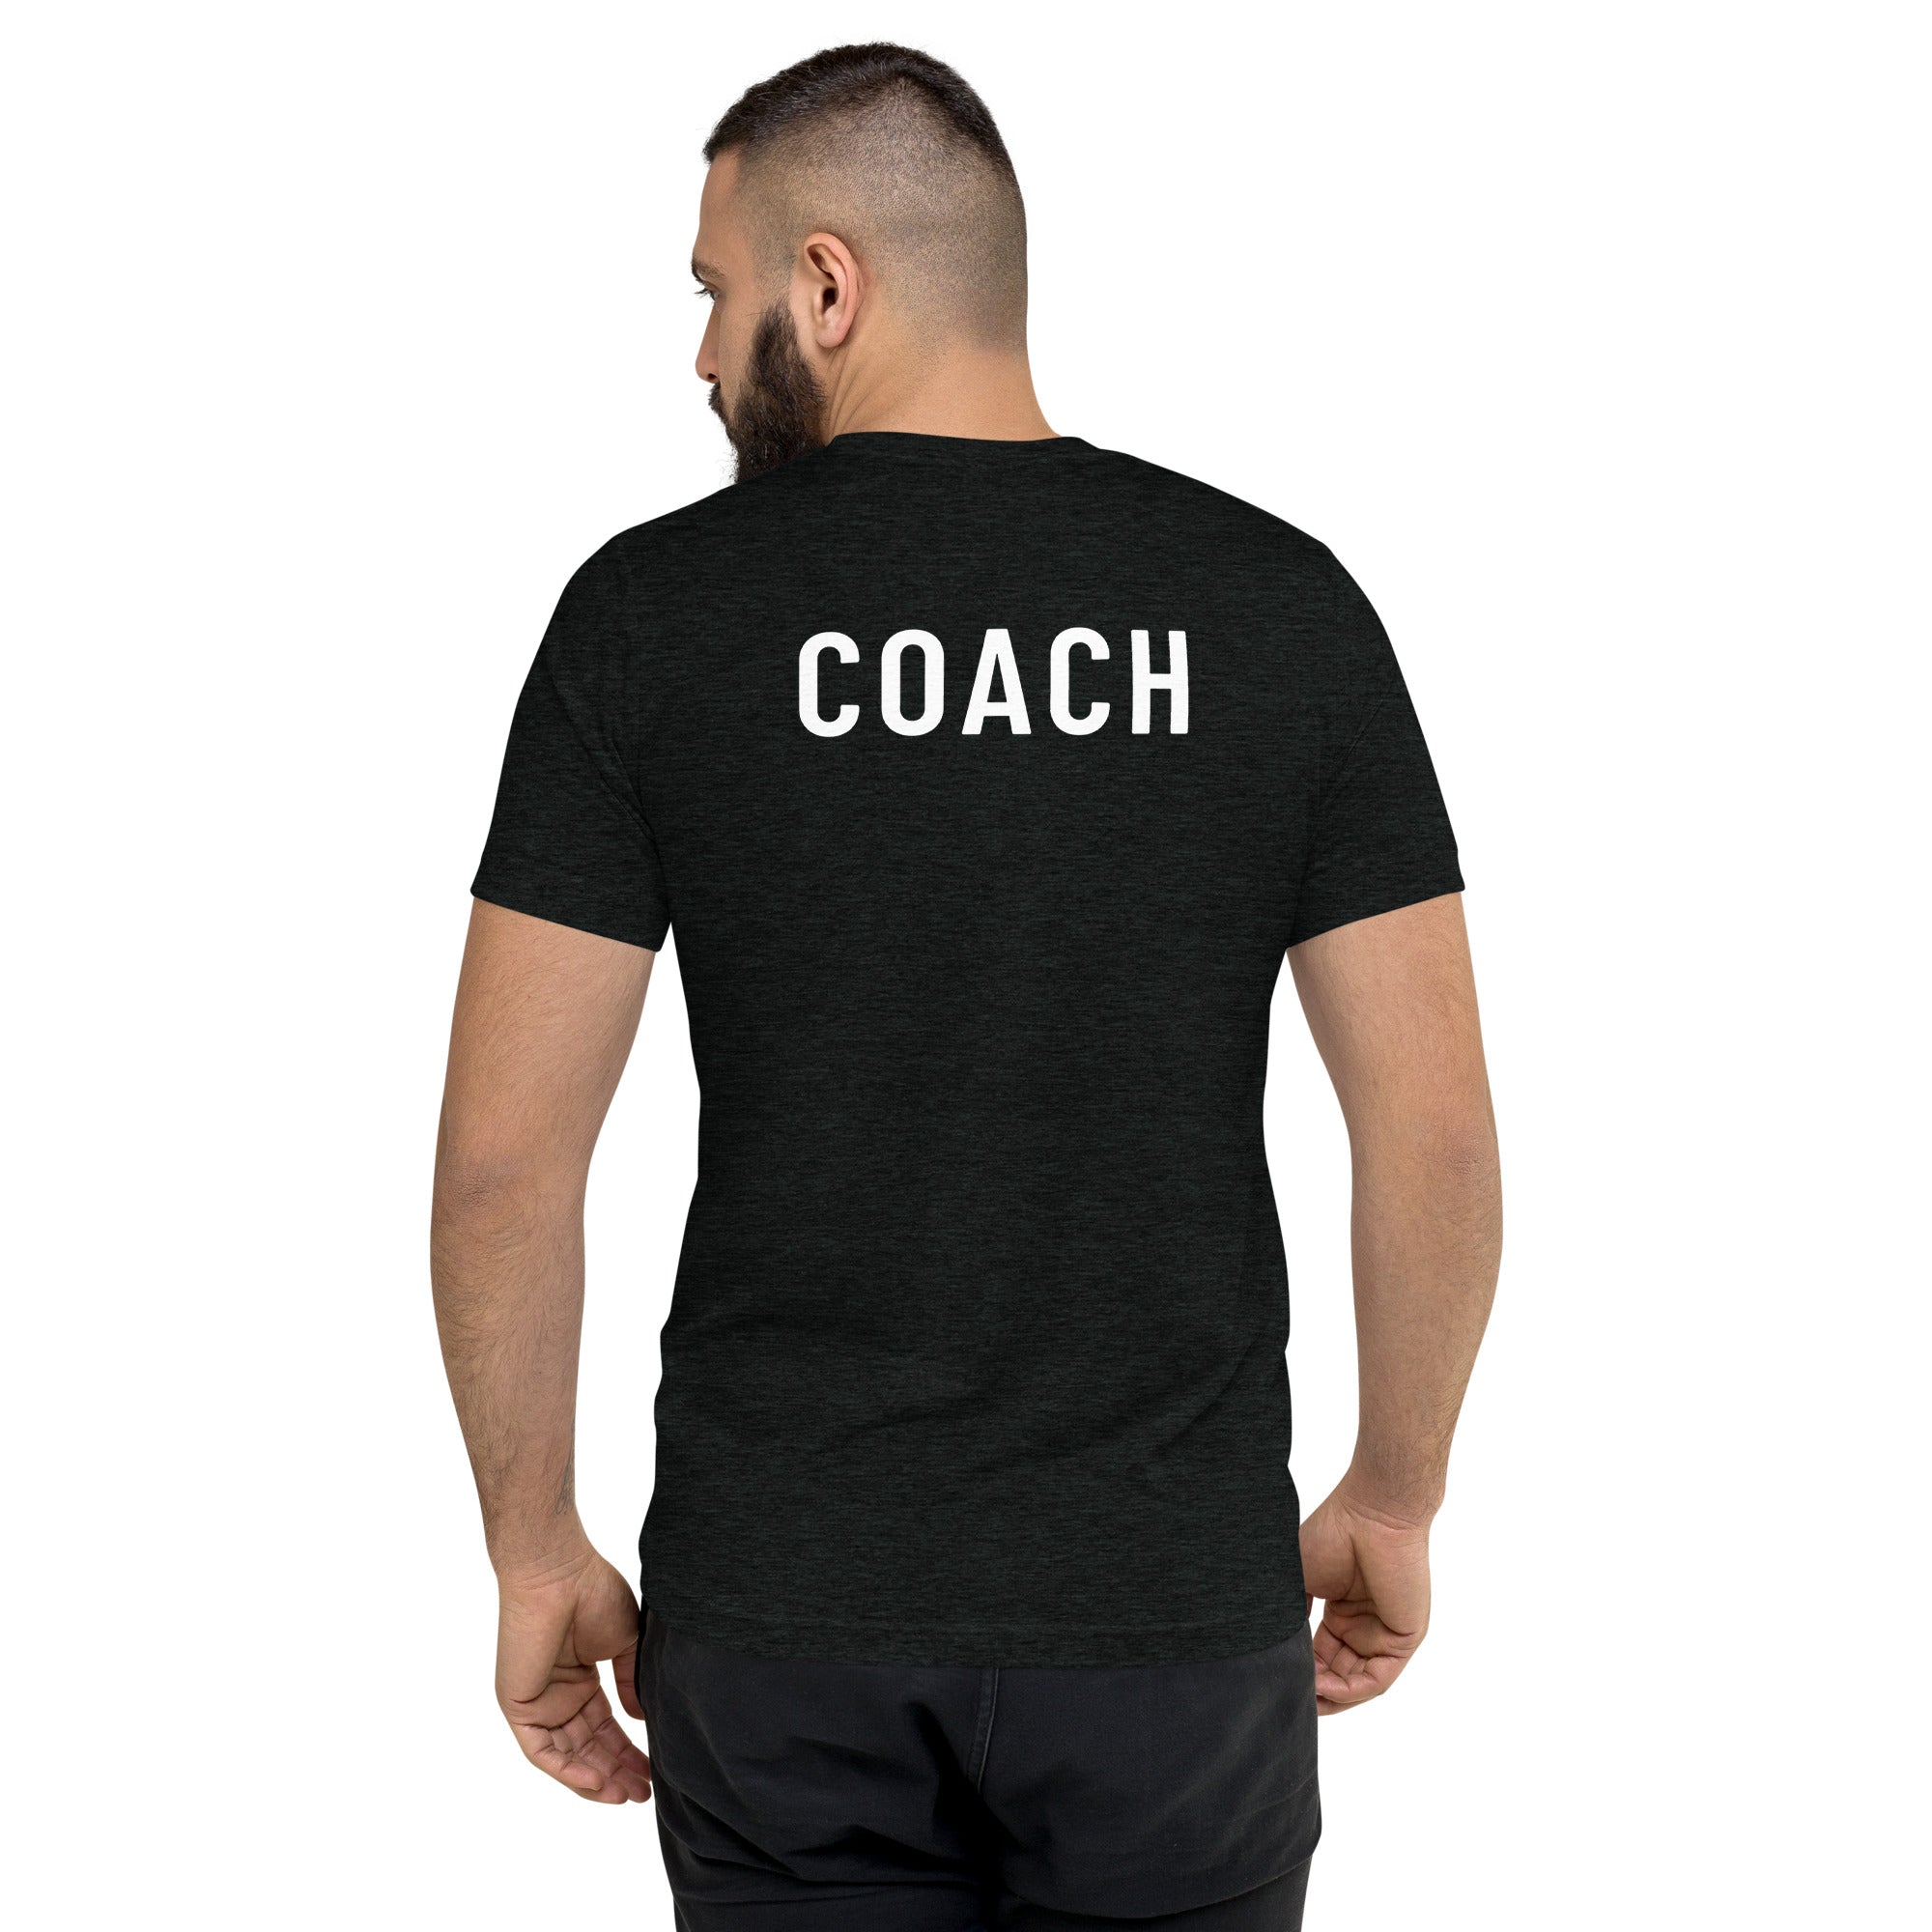 Morristown Coach - Charcoal Short sleeve t-shirt